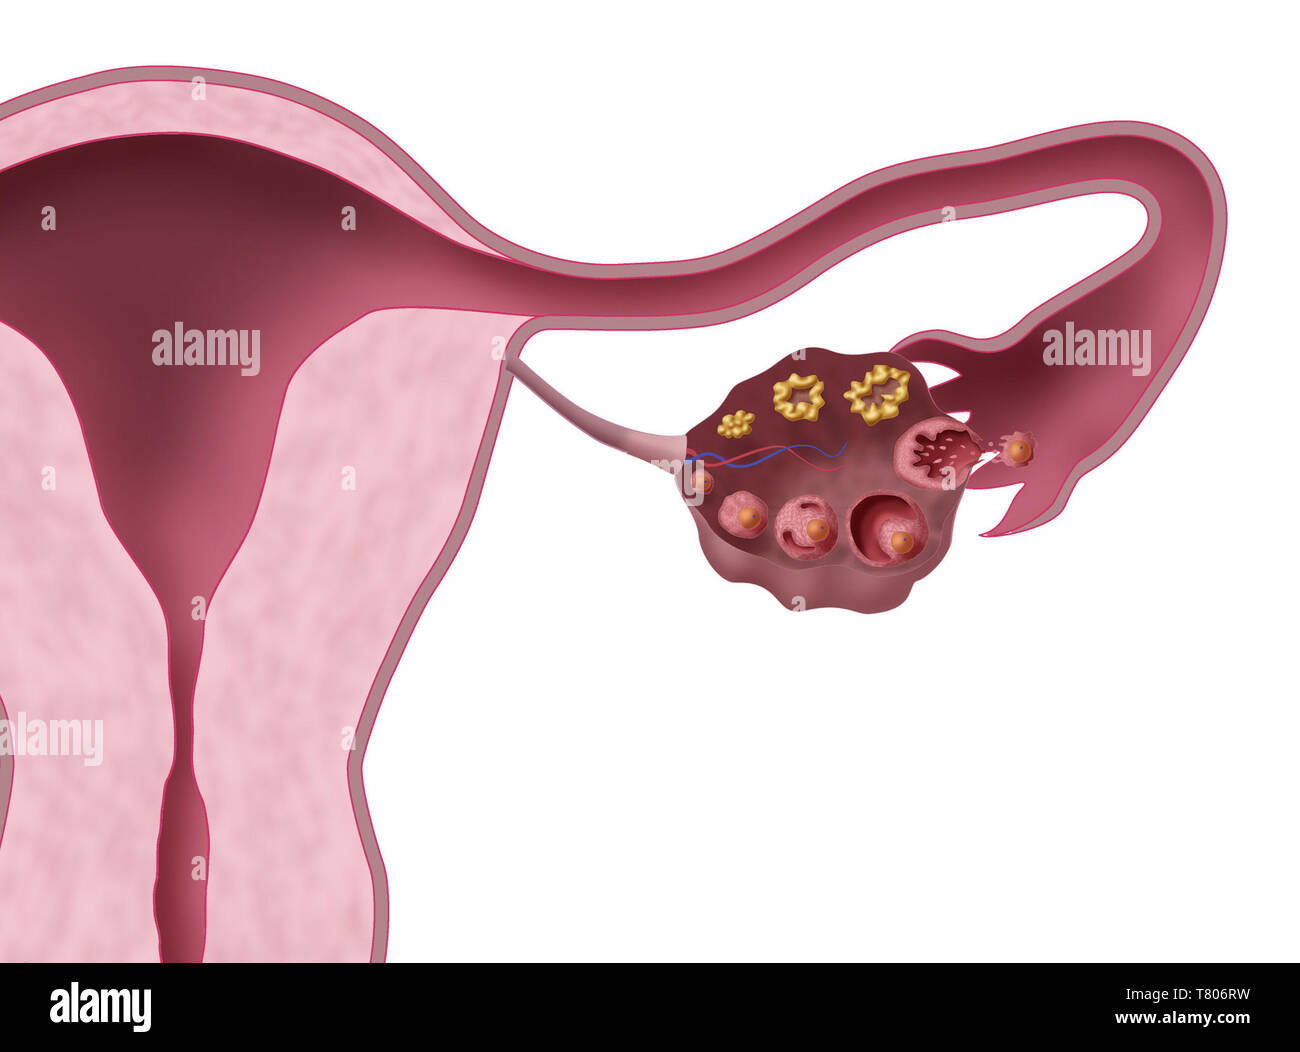 Ovarian Follicles, Illustration Stock Photo - Alamy